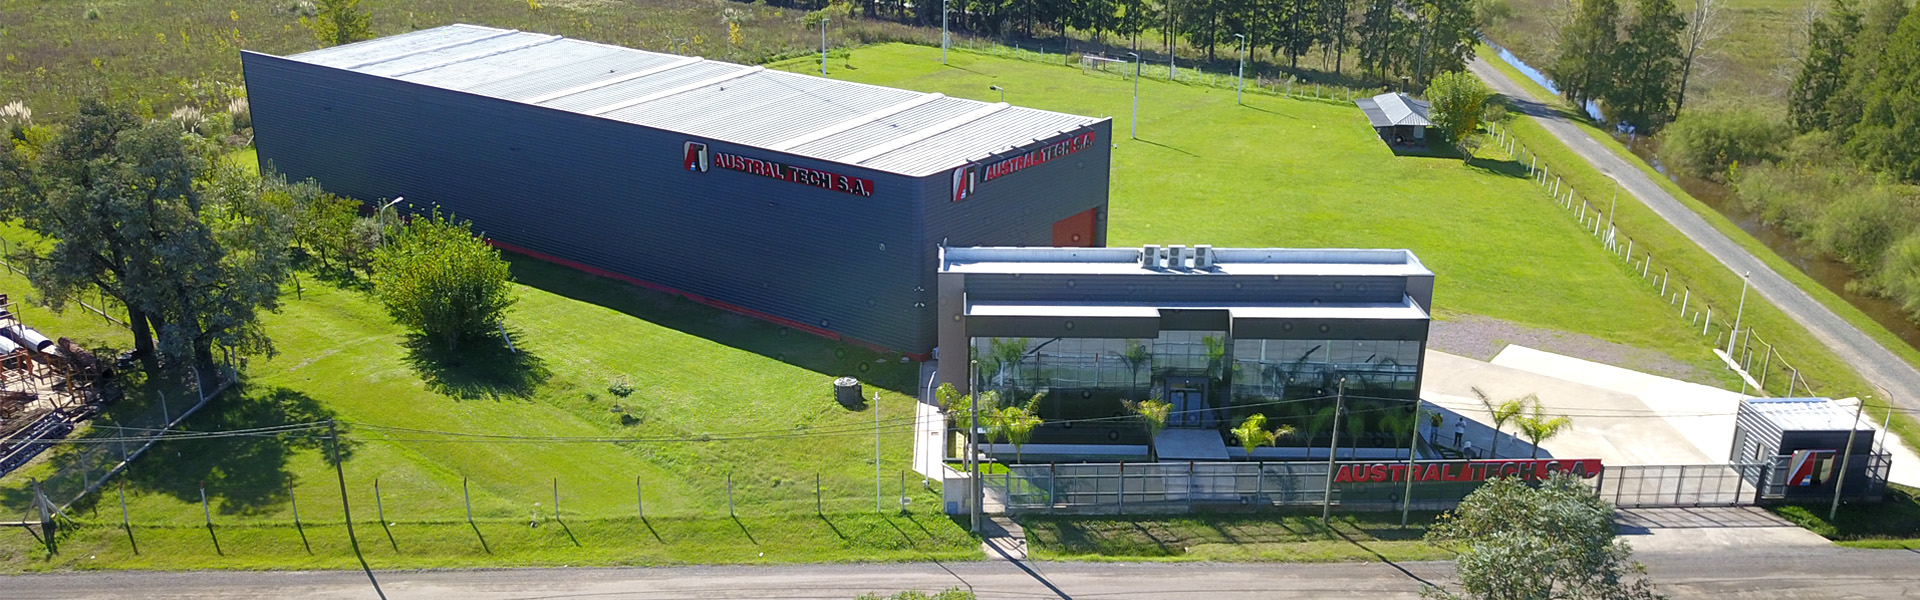 Fabrica Austral-Tech aerea